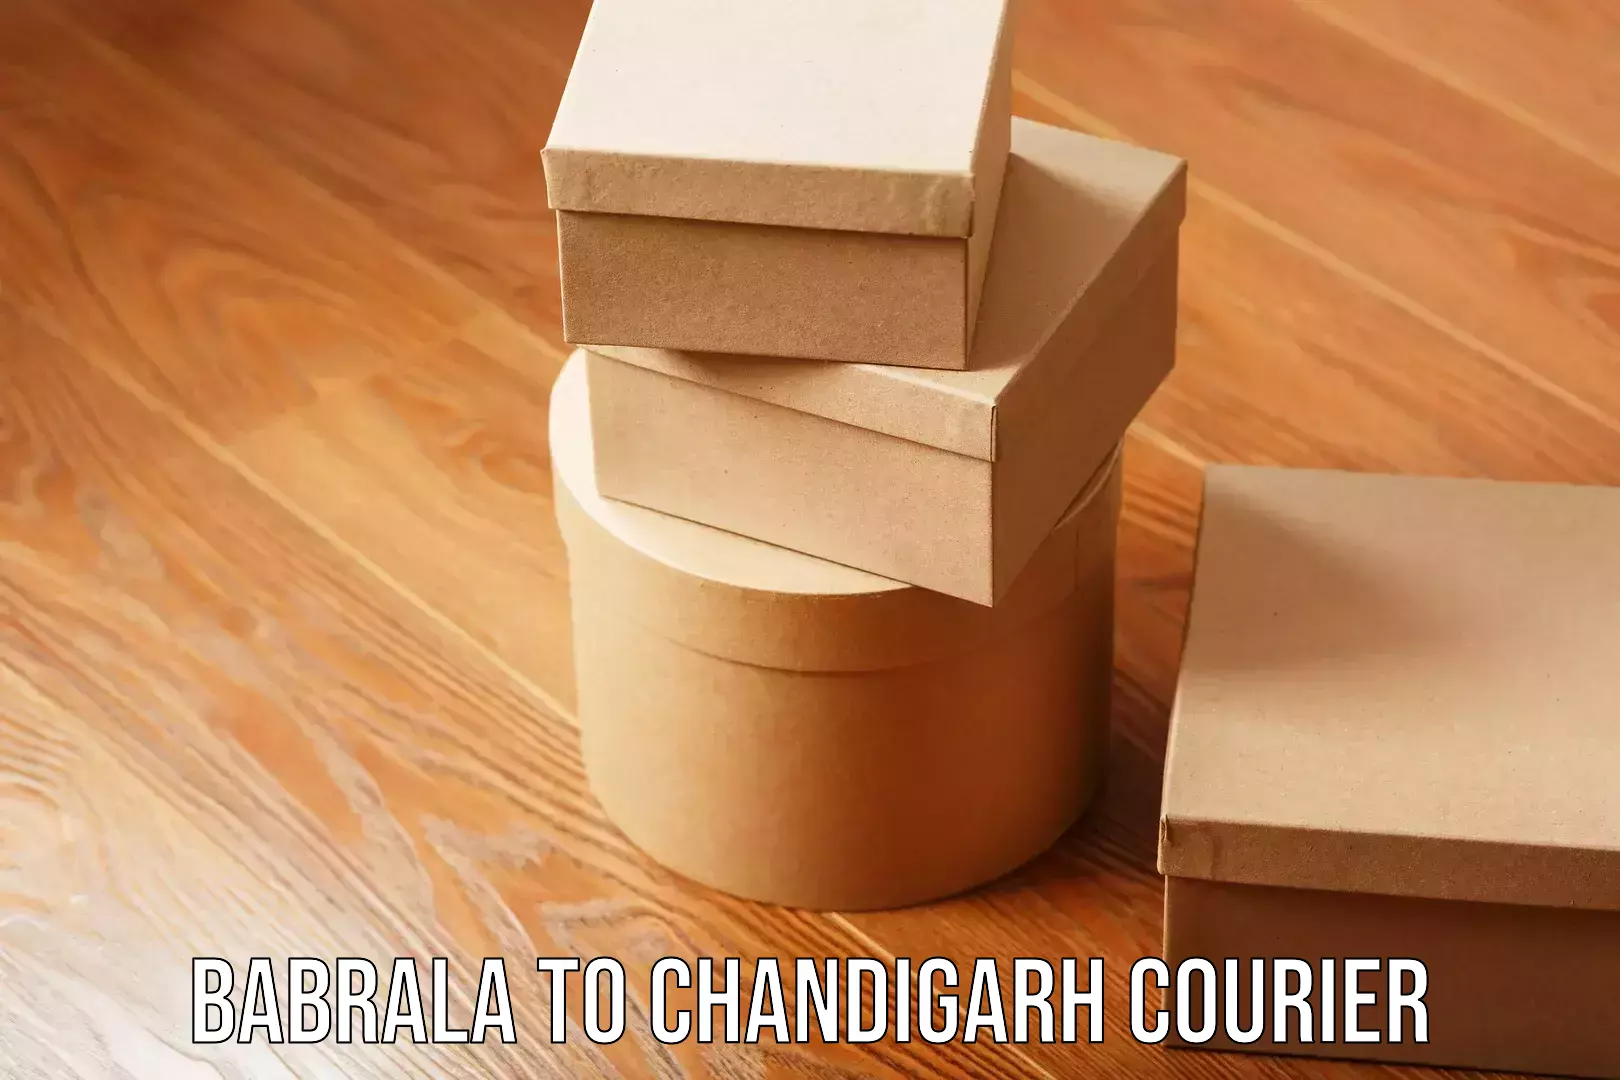 Logistics service provider Babrala to Chandigarh